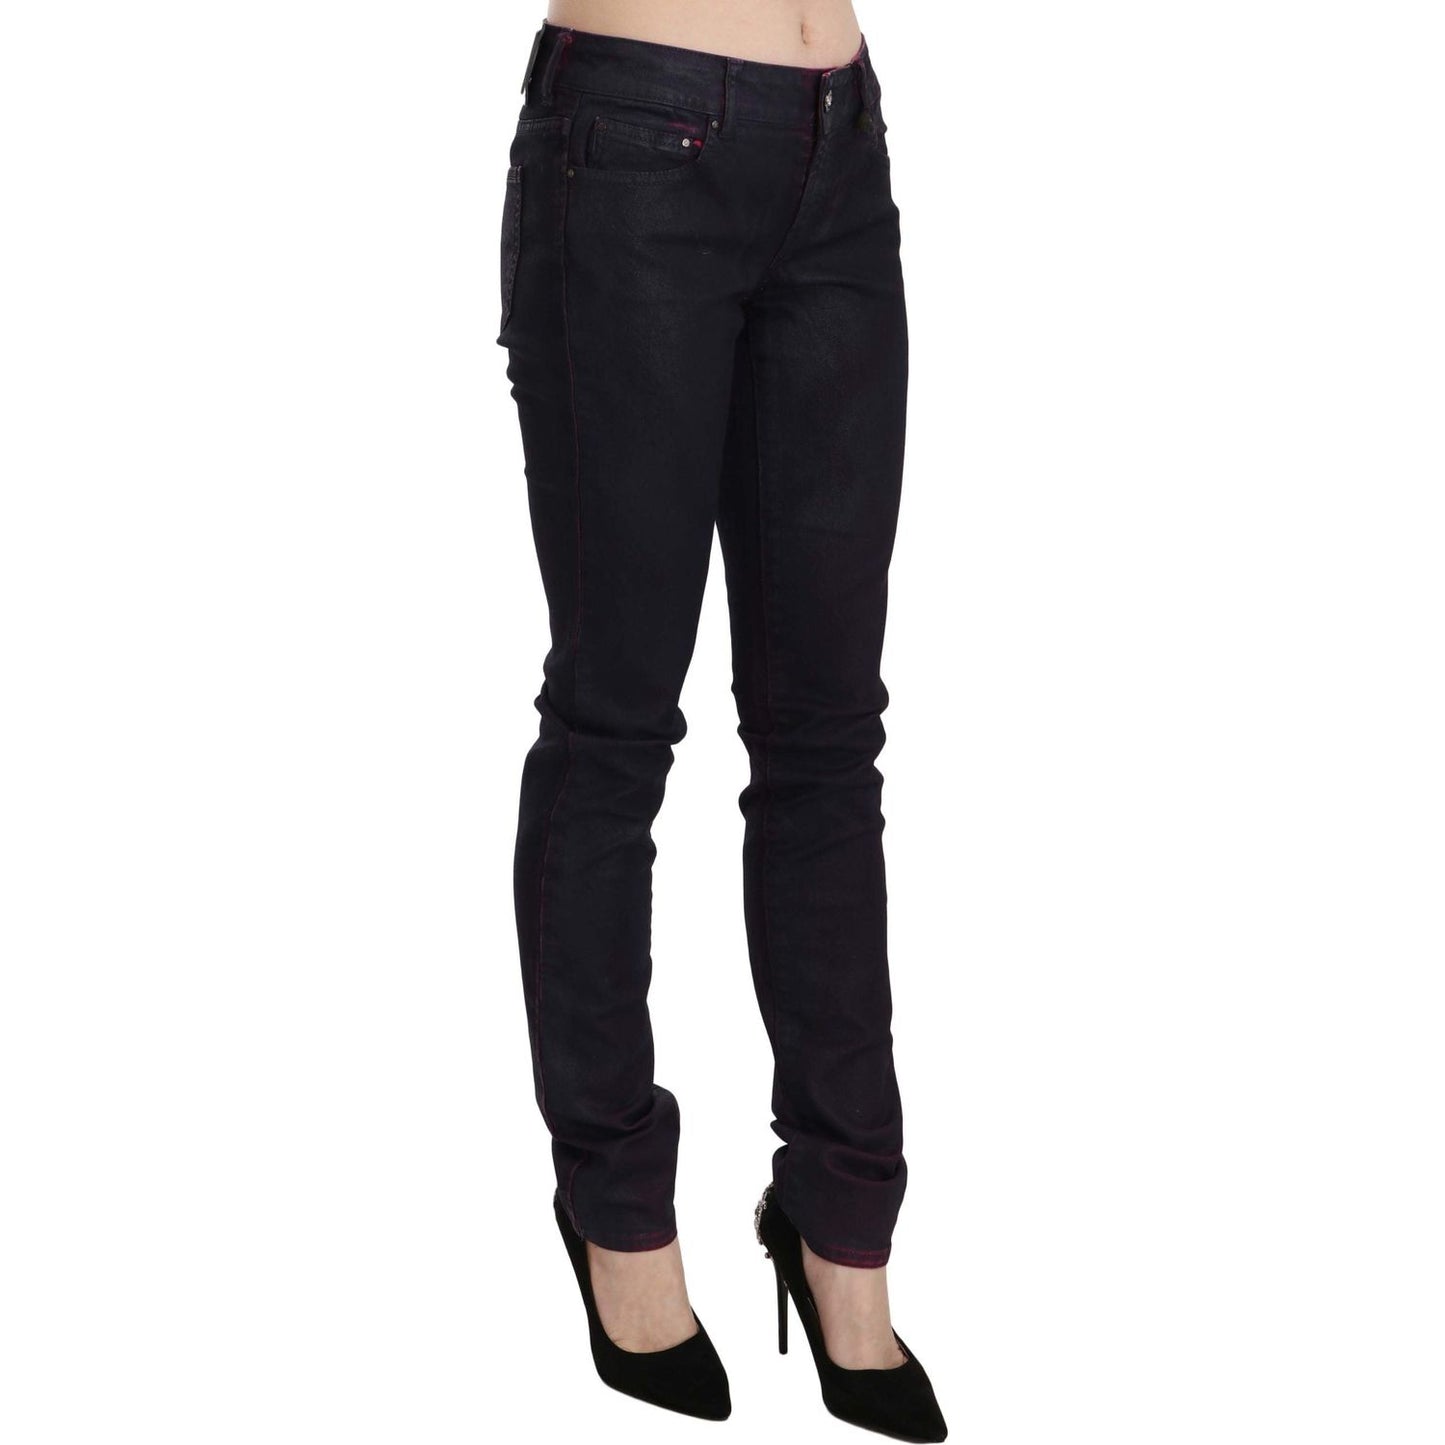 Just Cavalli Chic Black Low Waist Skinny Denim black-cotton-low-waist-skinny-denim-pants Jeans & Pants IMG_5925-scaled-a59d9767-0f7.jpg